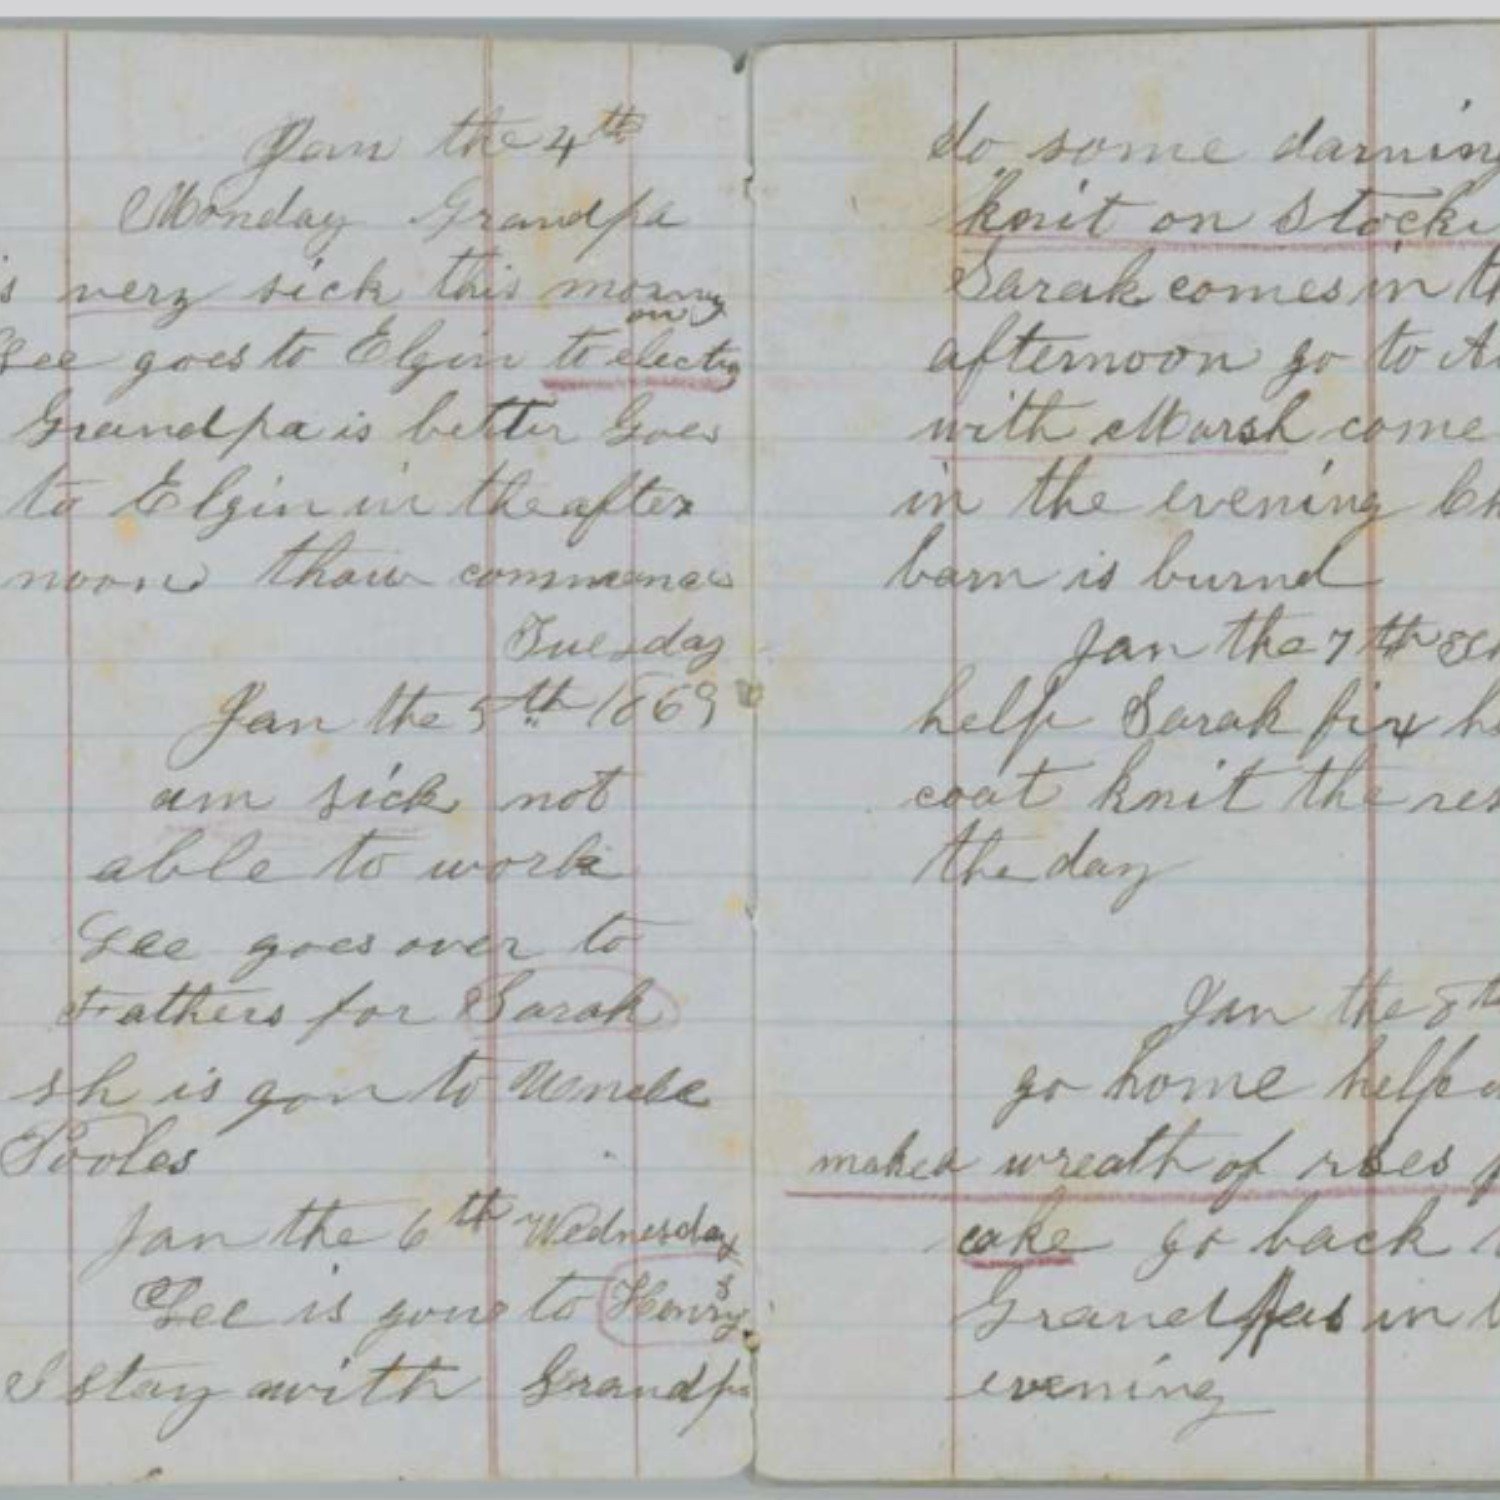 BONUS CONTENT: Rural Canadian History Moment - Diary of Jemima Ripley (1850-1919)